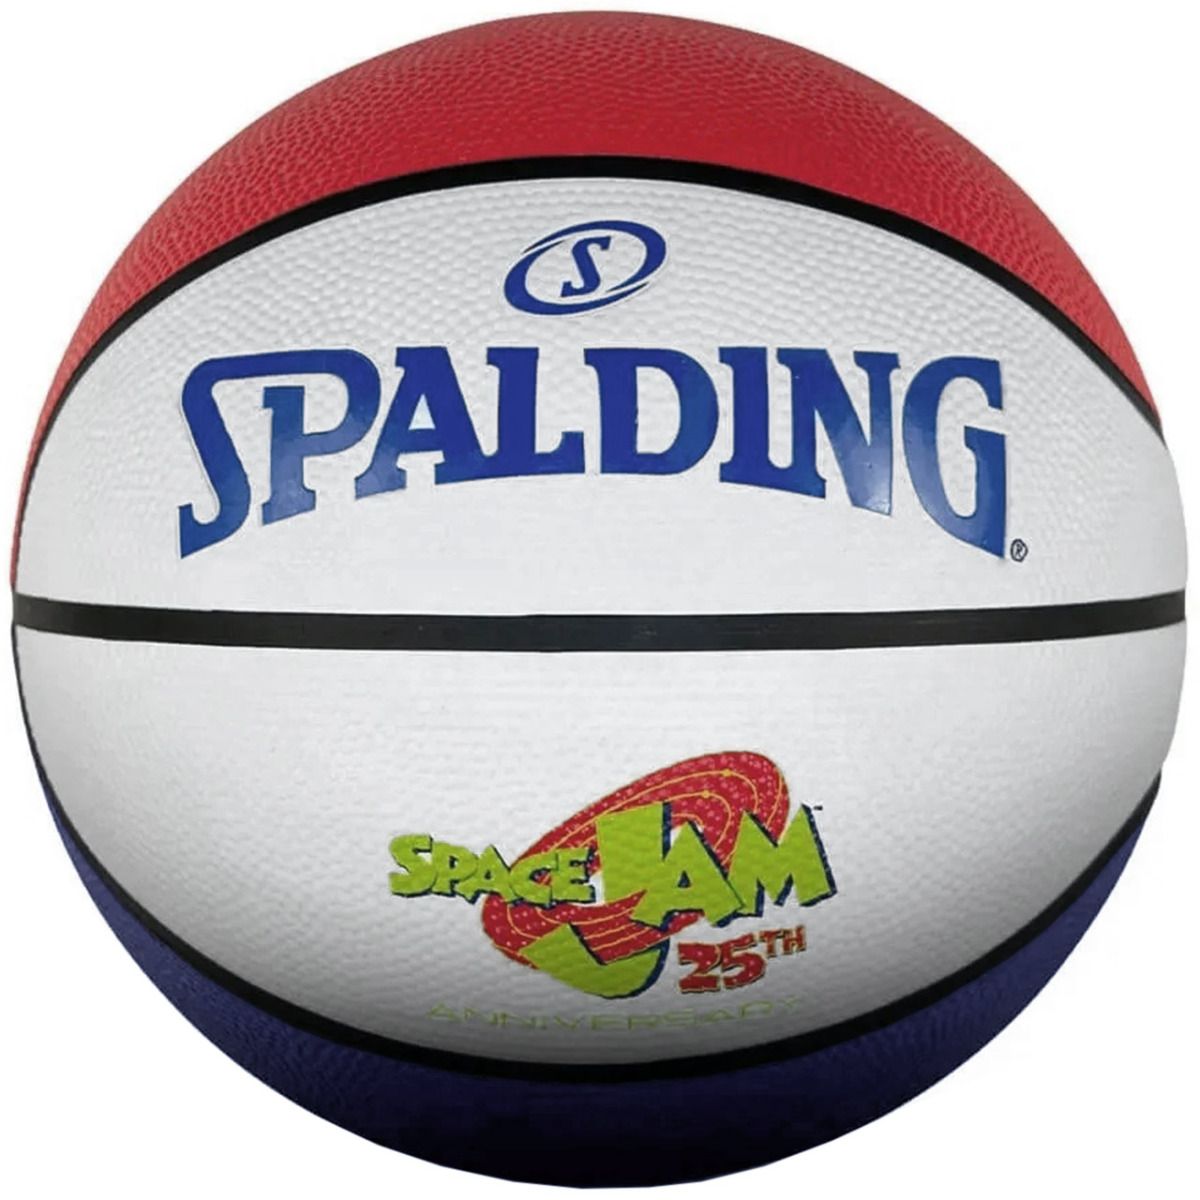 Spalding Basketbalový míč Space Jam 25Th Anniversary 84687Z